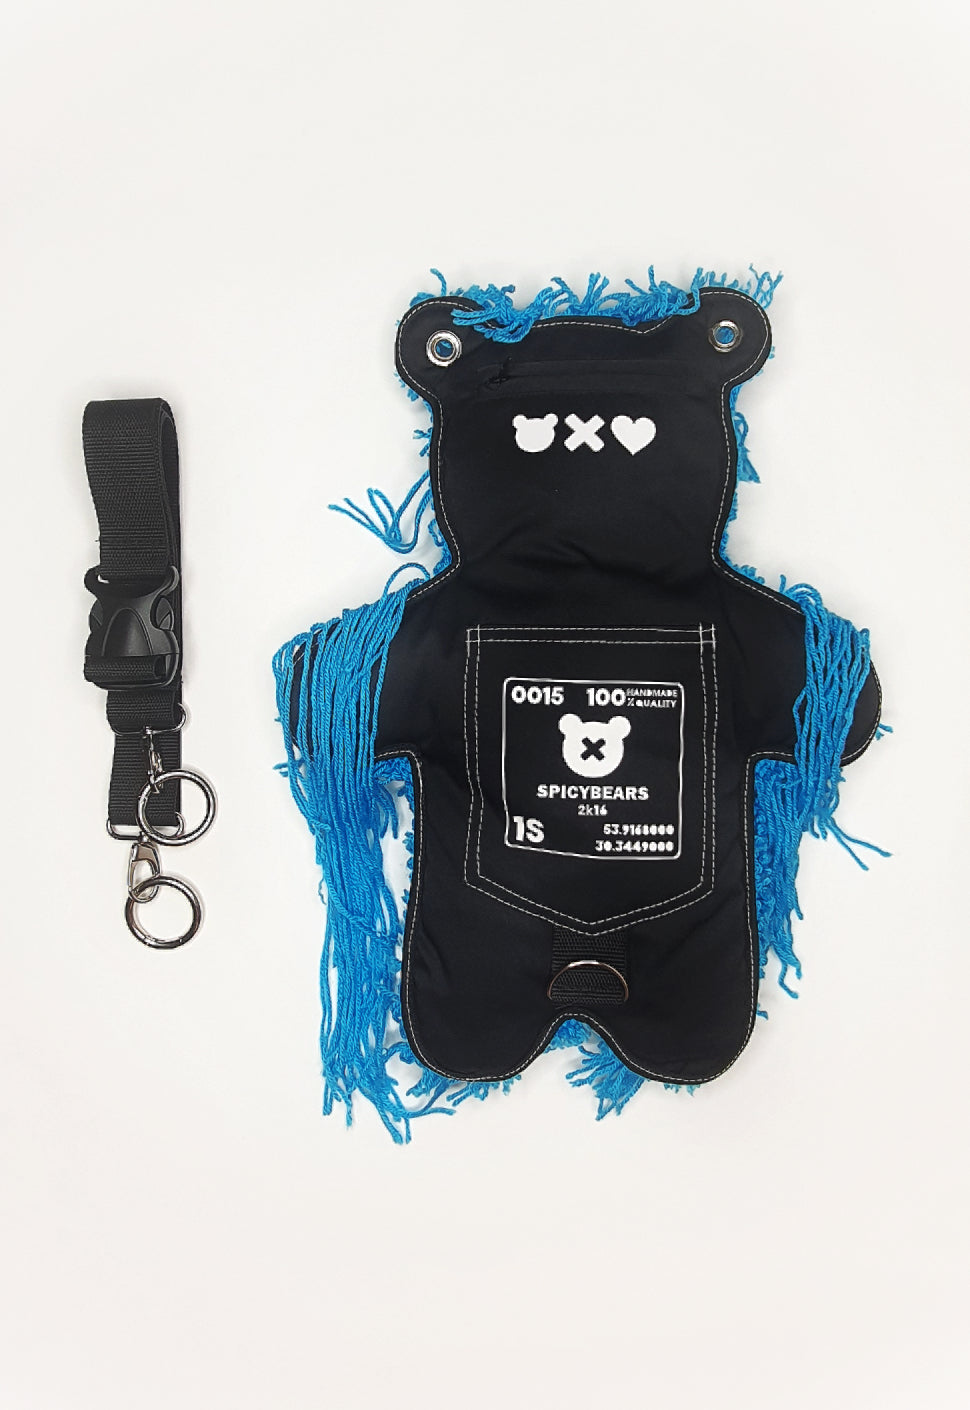 SPICYBEARS Spooky Bear Bag In Black With Blue Semi-Wool Coat - SPICYBEARS